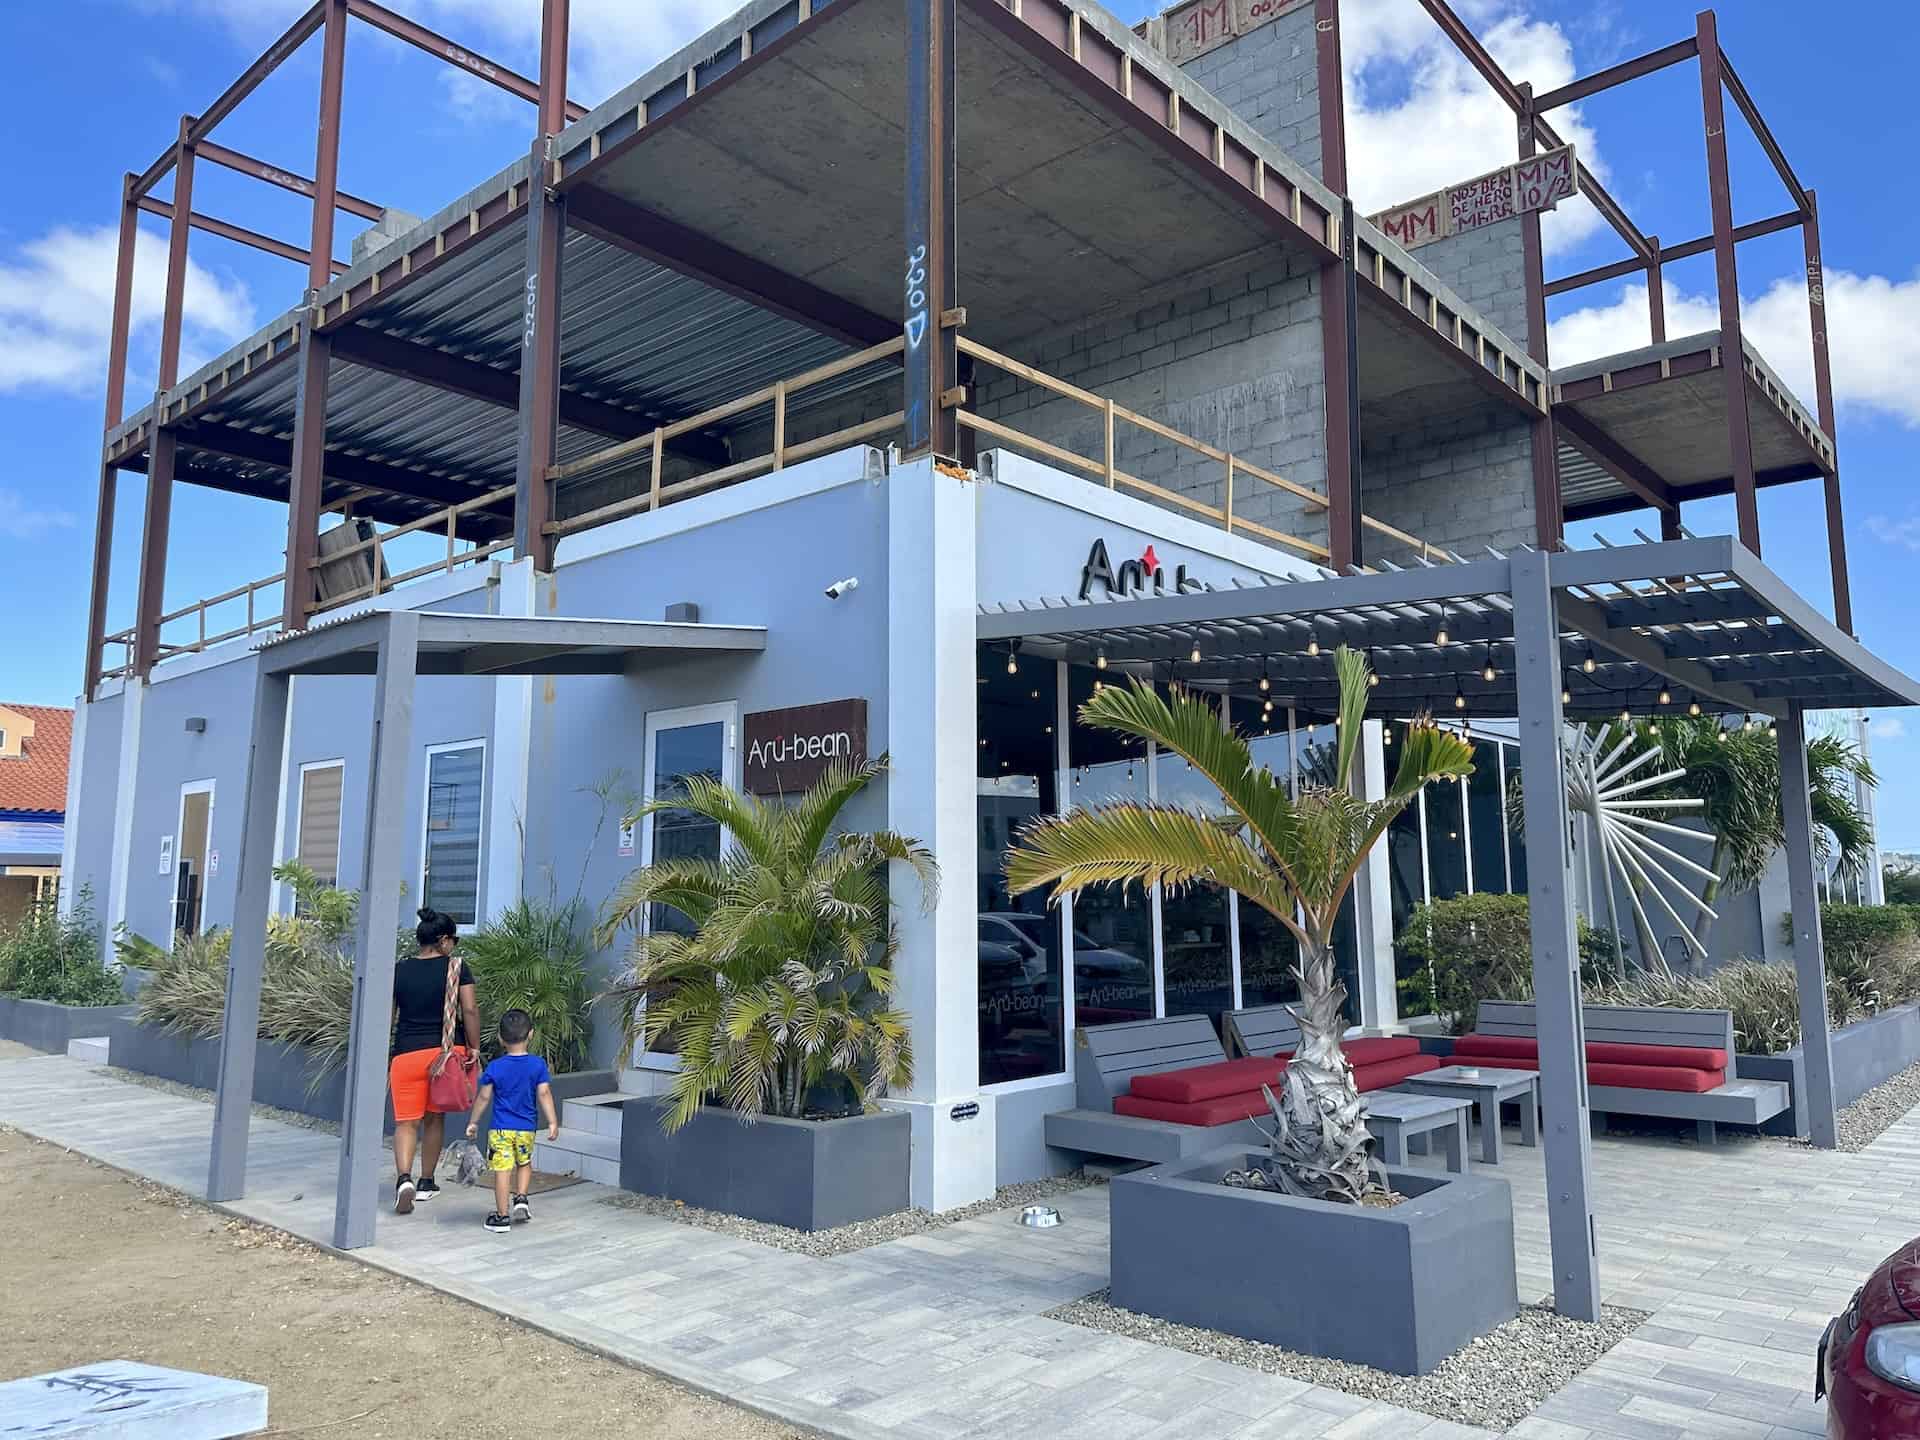 Aru-bean Coffeehouse and Brasserie at Eagle Beach in Aruba